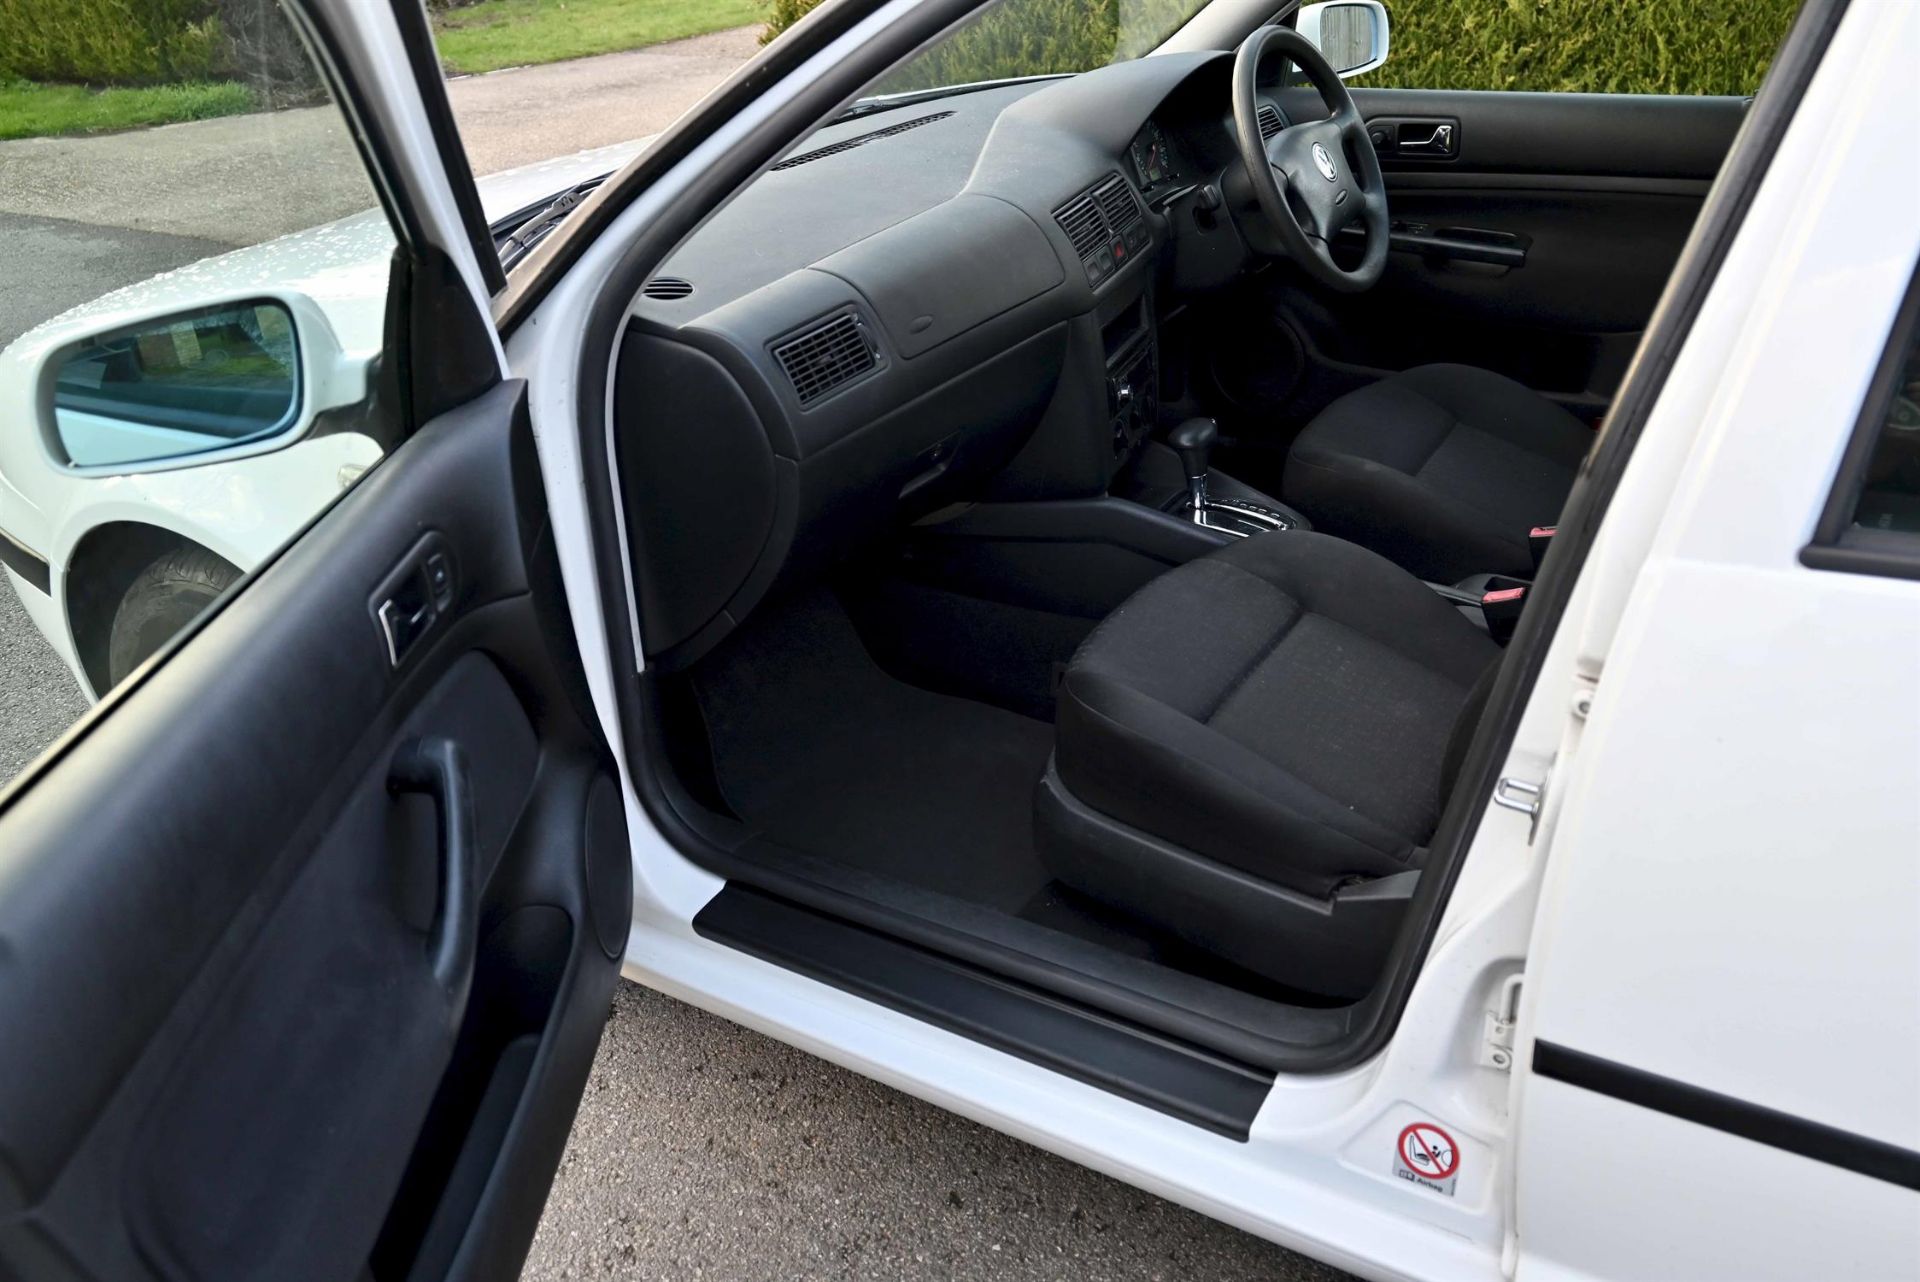 2001 VW Golf 1.6 S Auto 5-door Hatchback. Registration number AJ51 OBZ. White with black cloth - Image 7 of 14